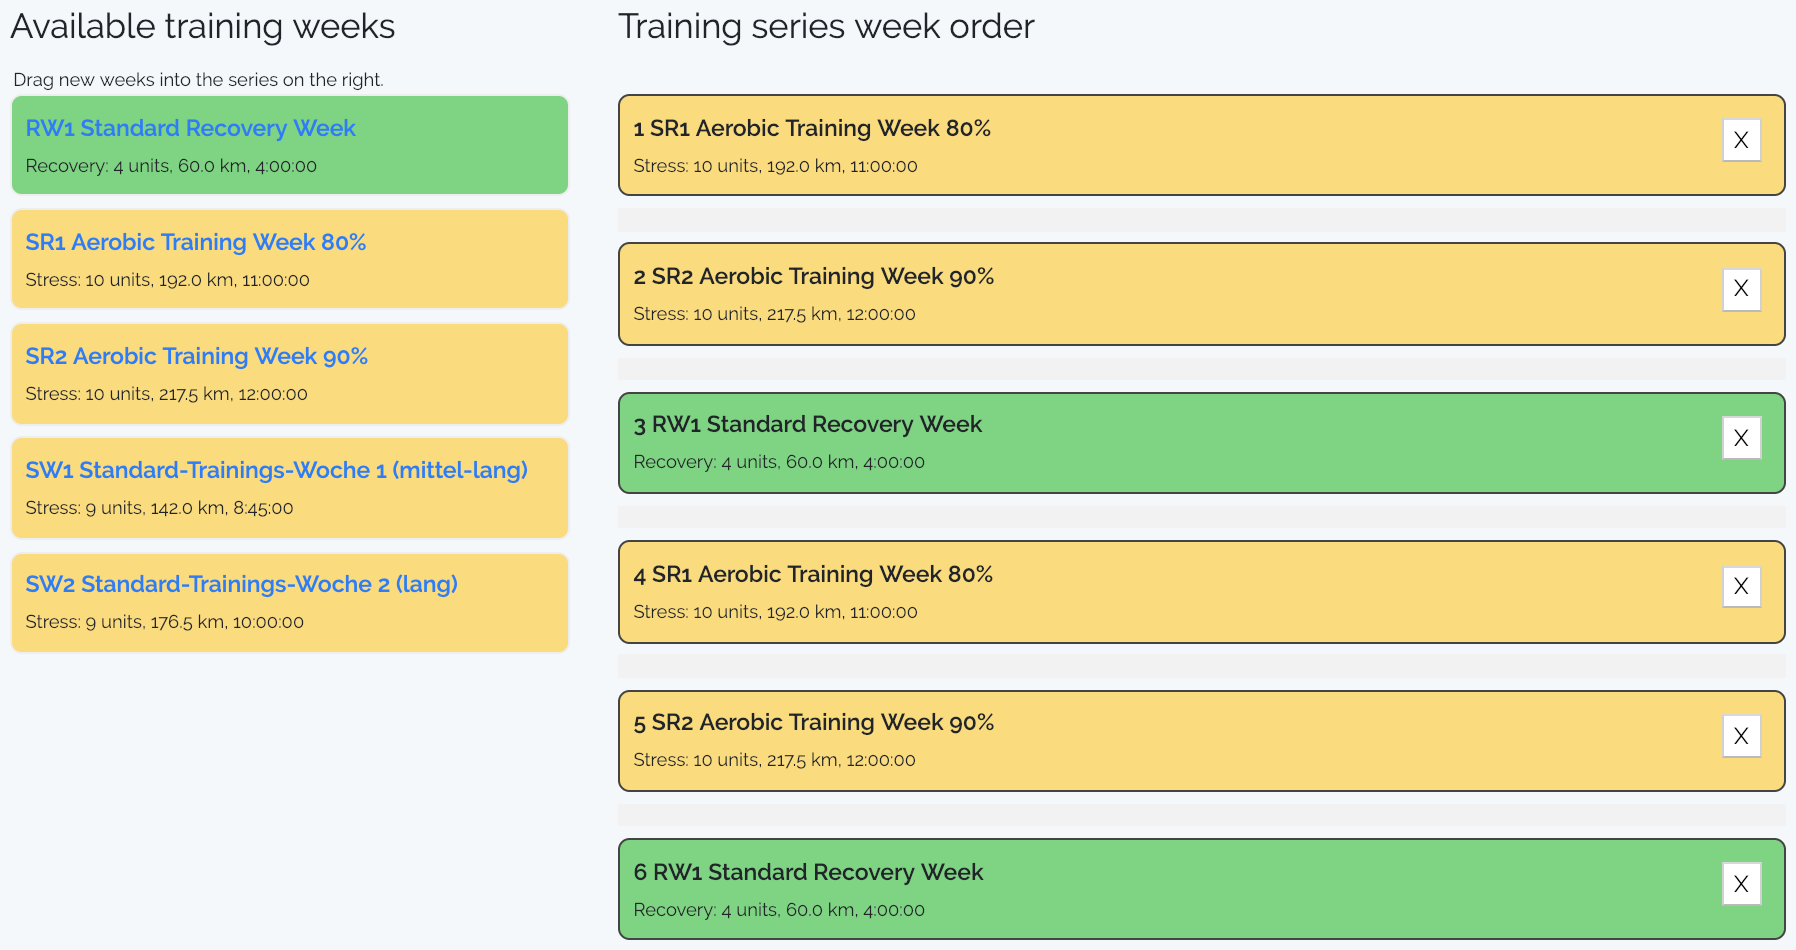 training series